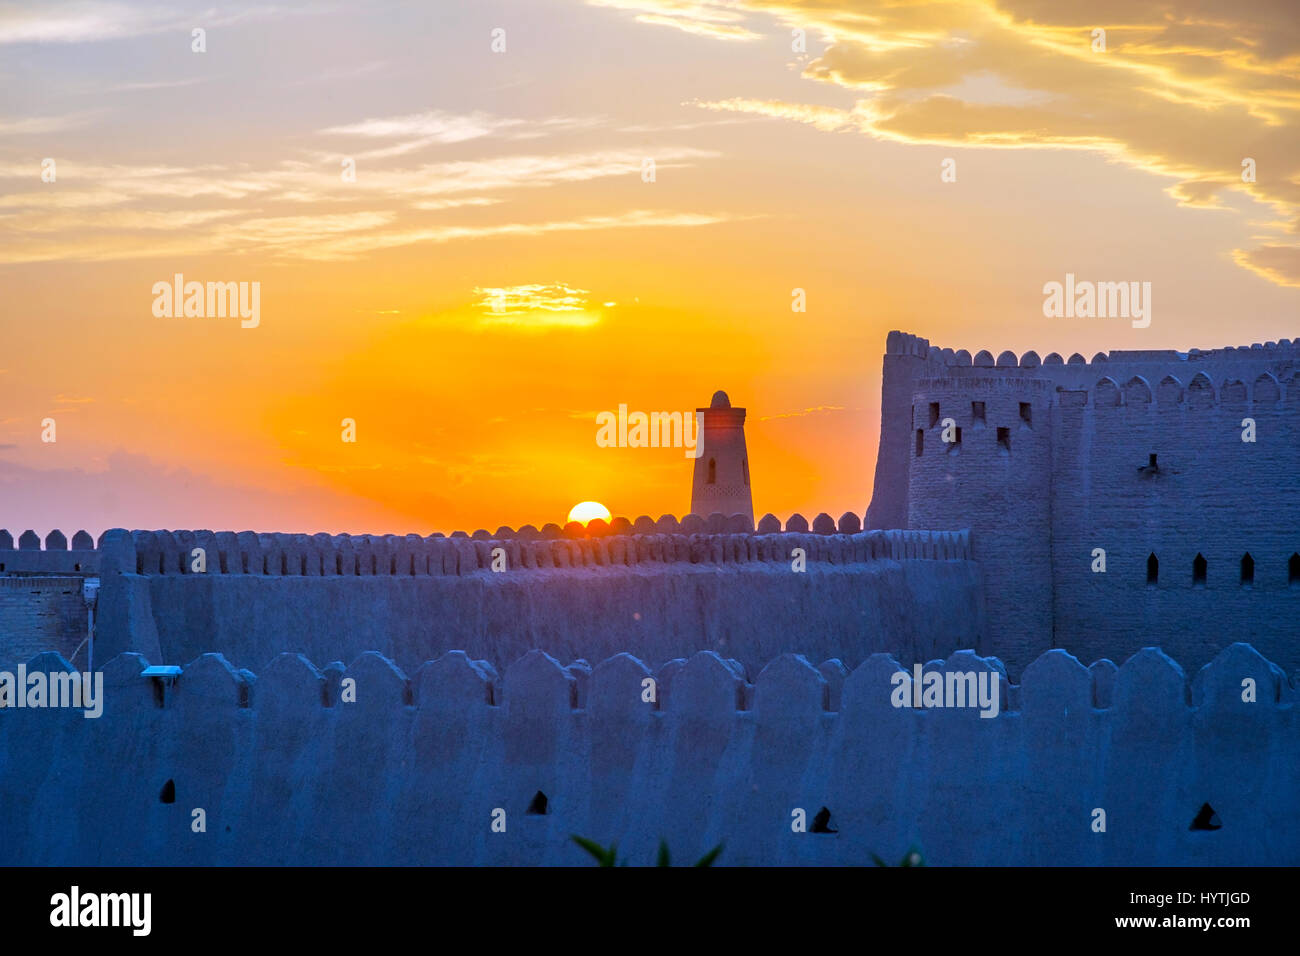 Silhouette of old city wall and minaret in sunset, Khiva, Uzbekistan Stock Photo